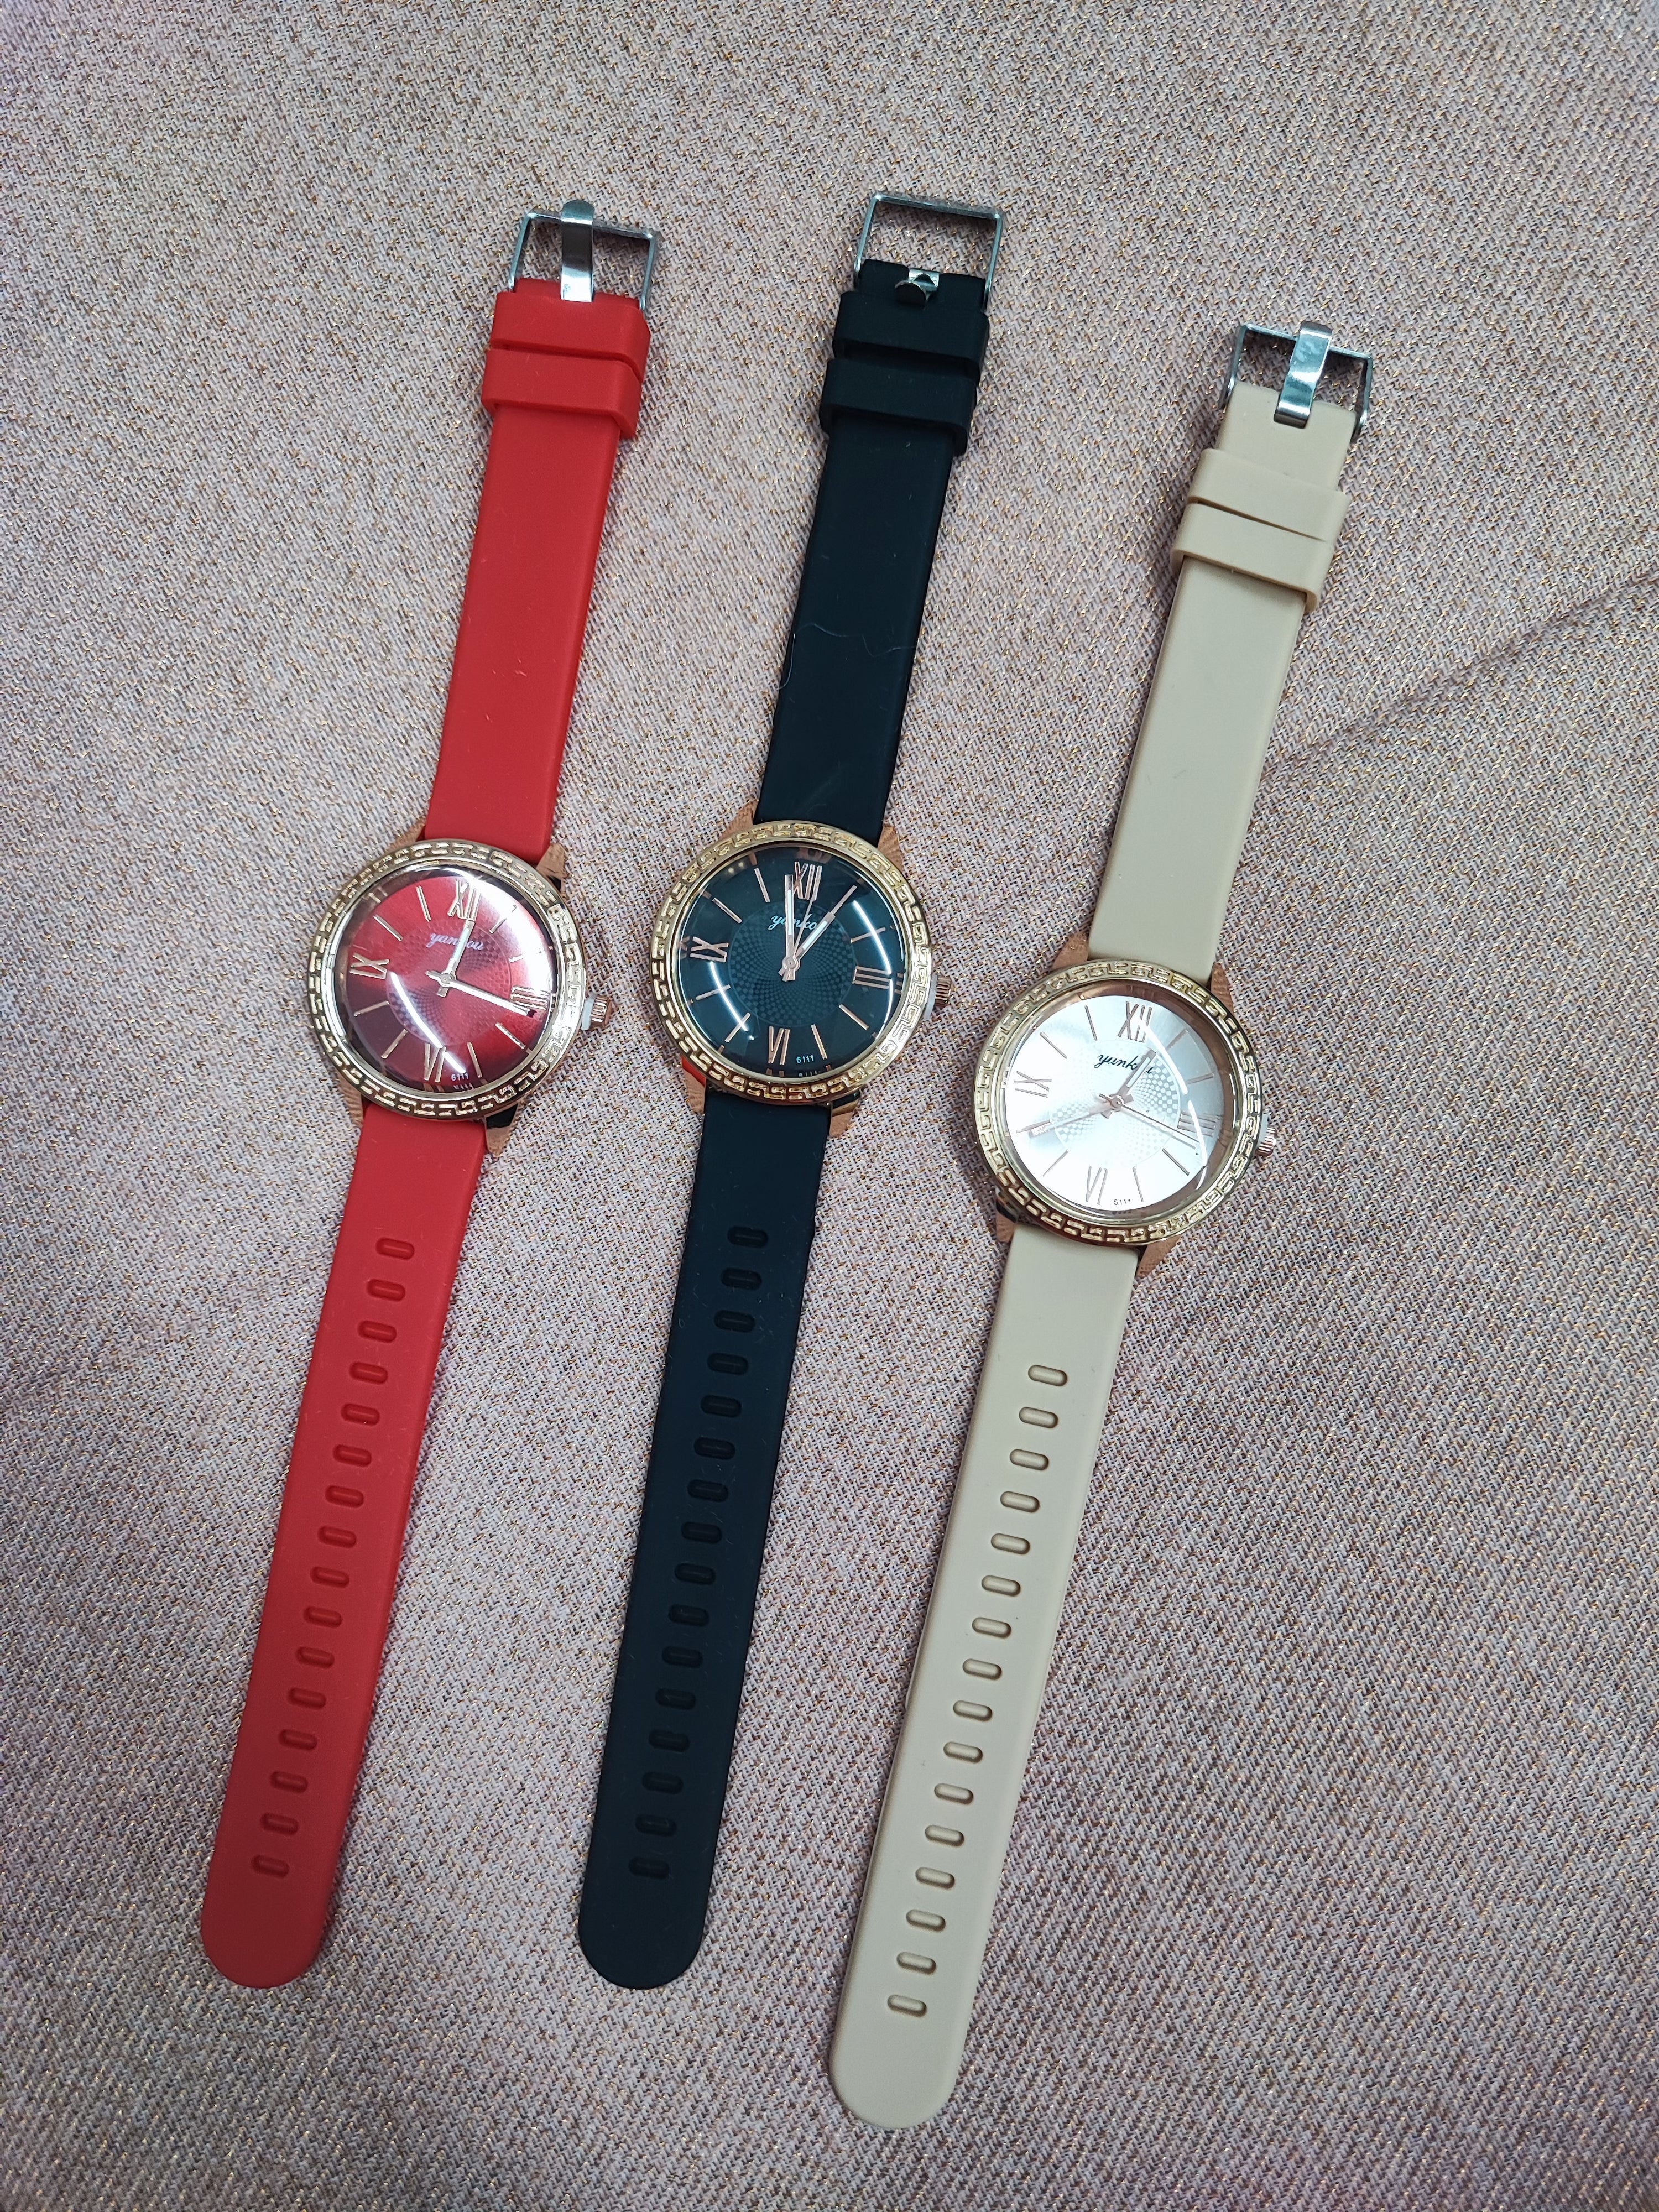 Women's watches (x8)#1